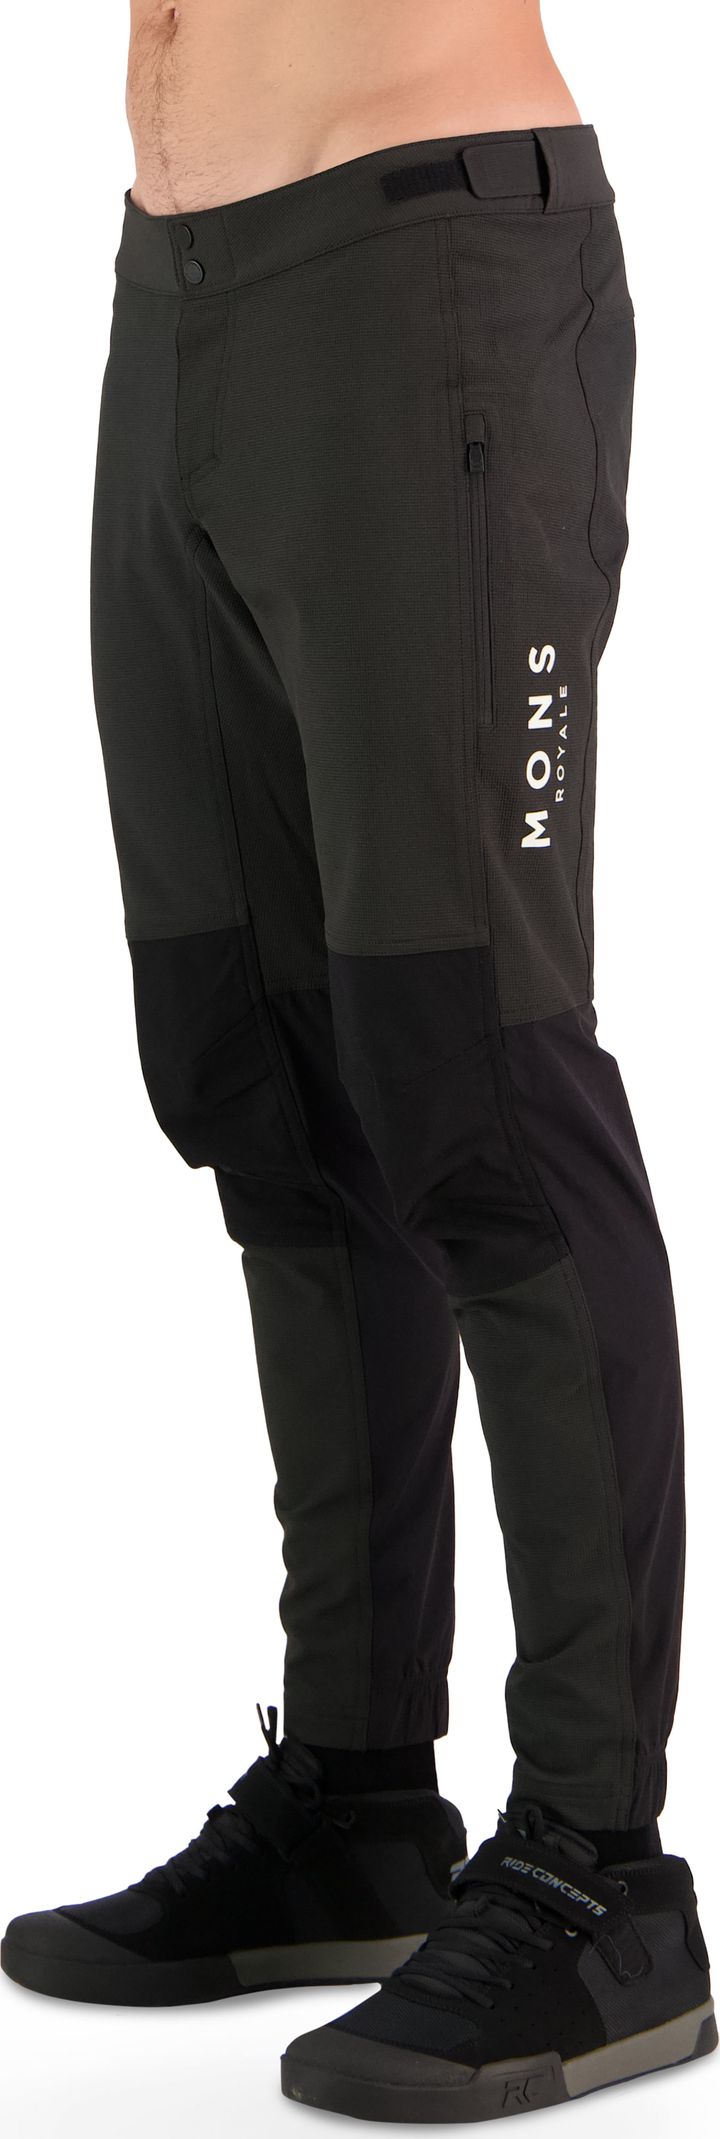 Mons Royale Men's Momentum Bike Pants Black Mons Royale